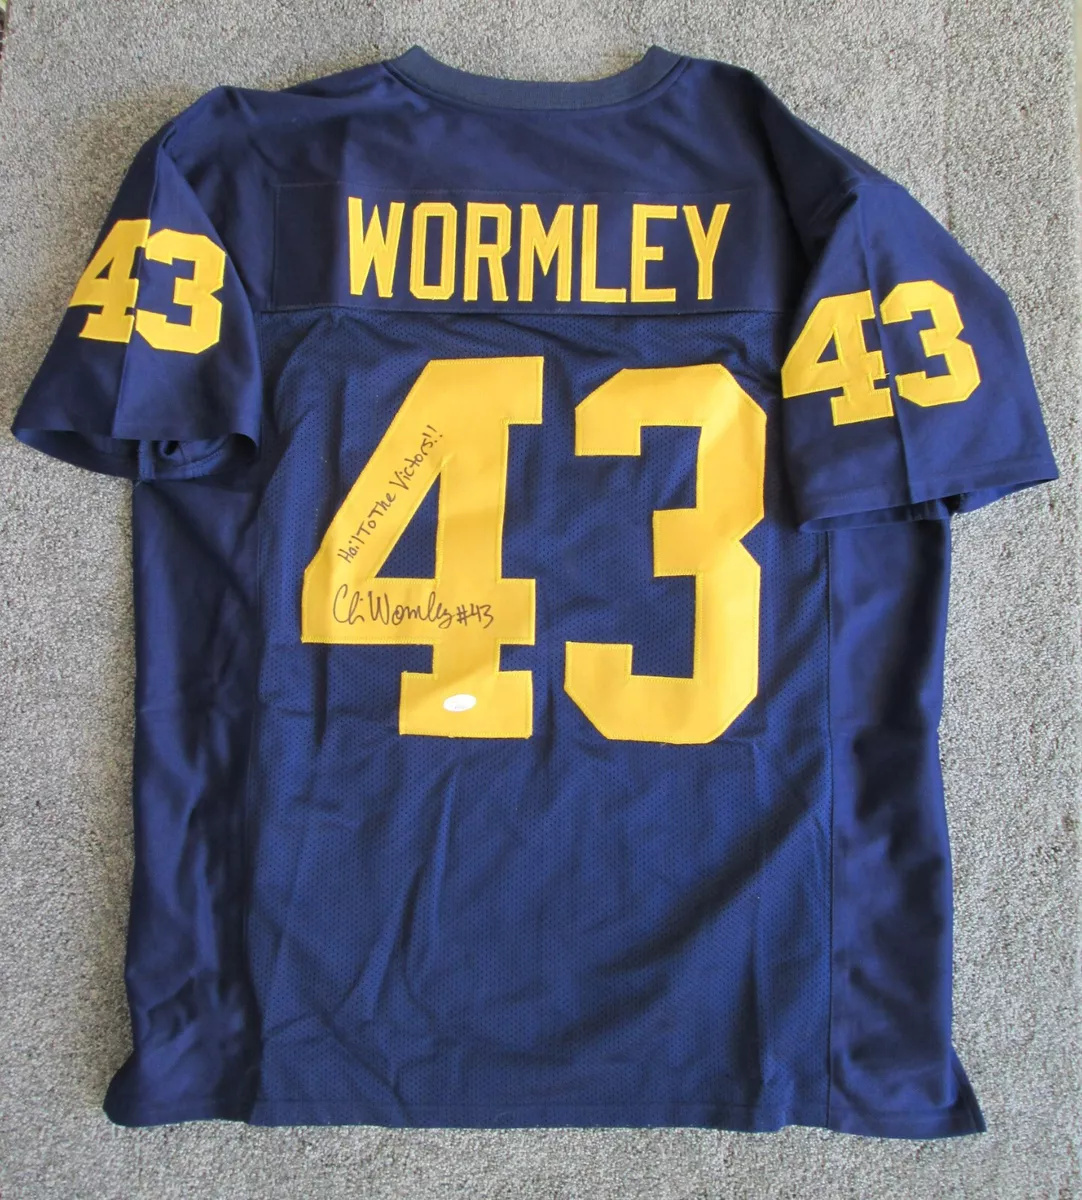 chris wormley jersey